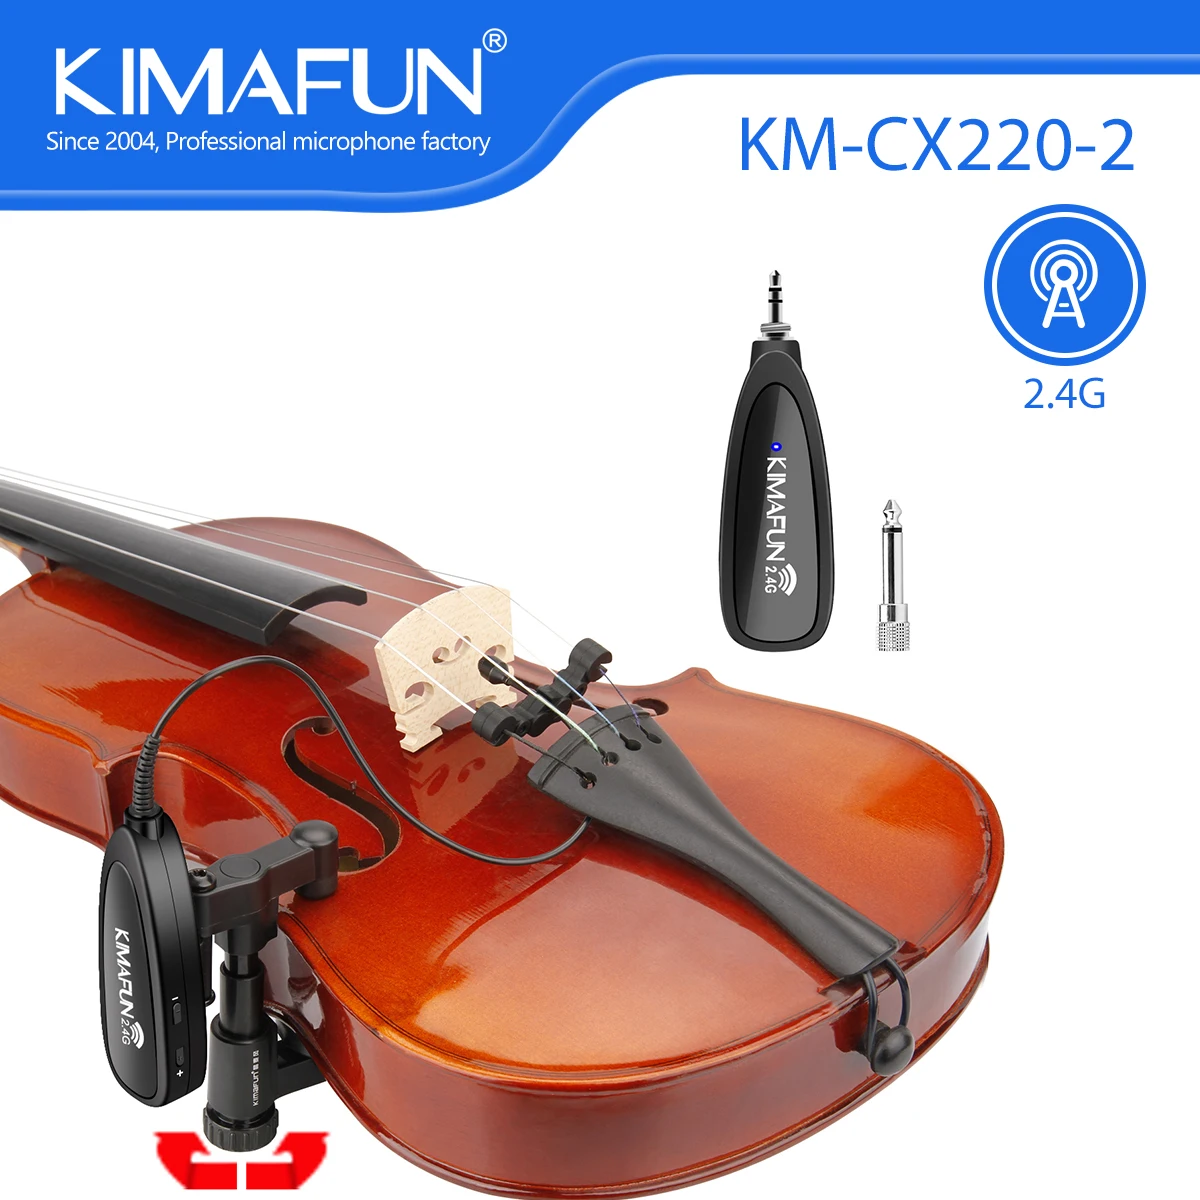 KIMAFUN Music Instrument Microfone Condenser Violin Microphone for Vlogging Video Record Tiktok Youtube Live Streaming Teaching